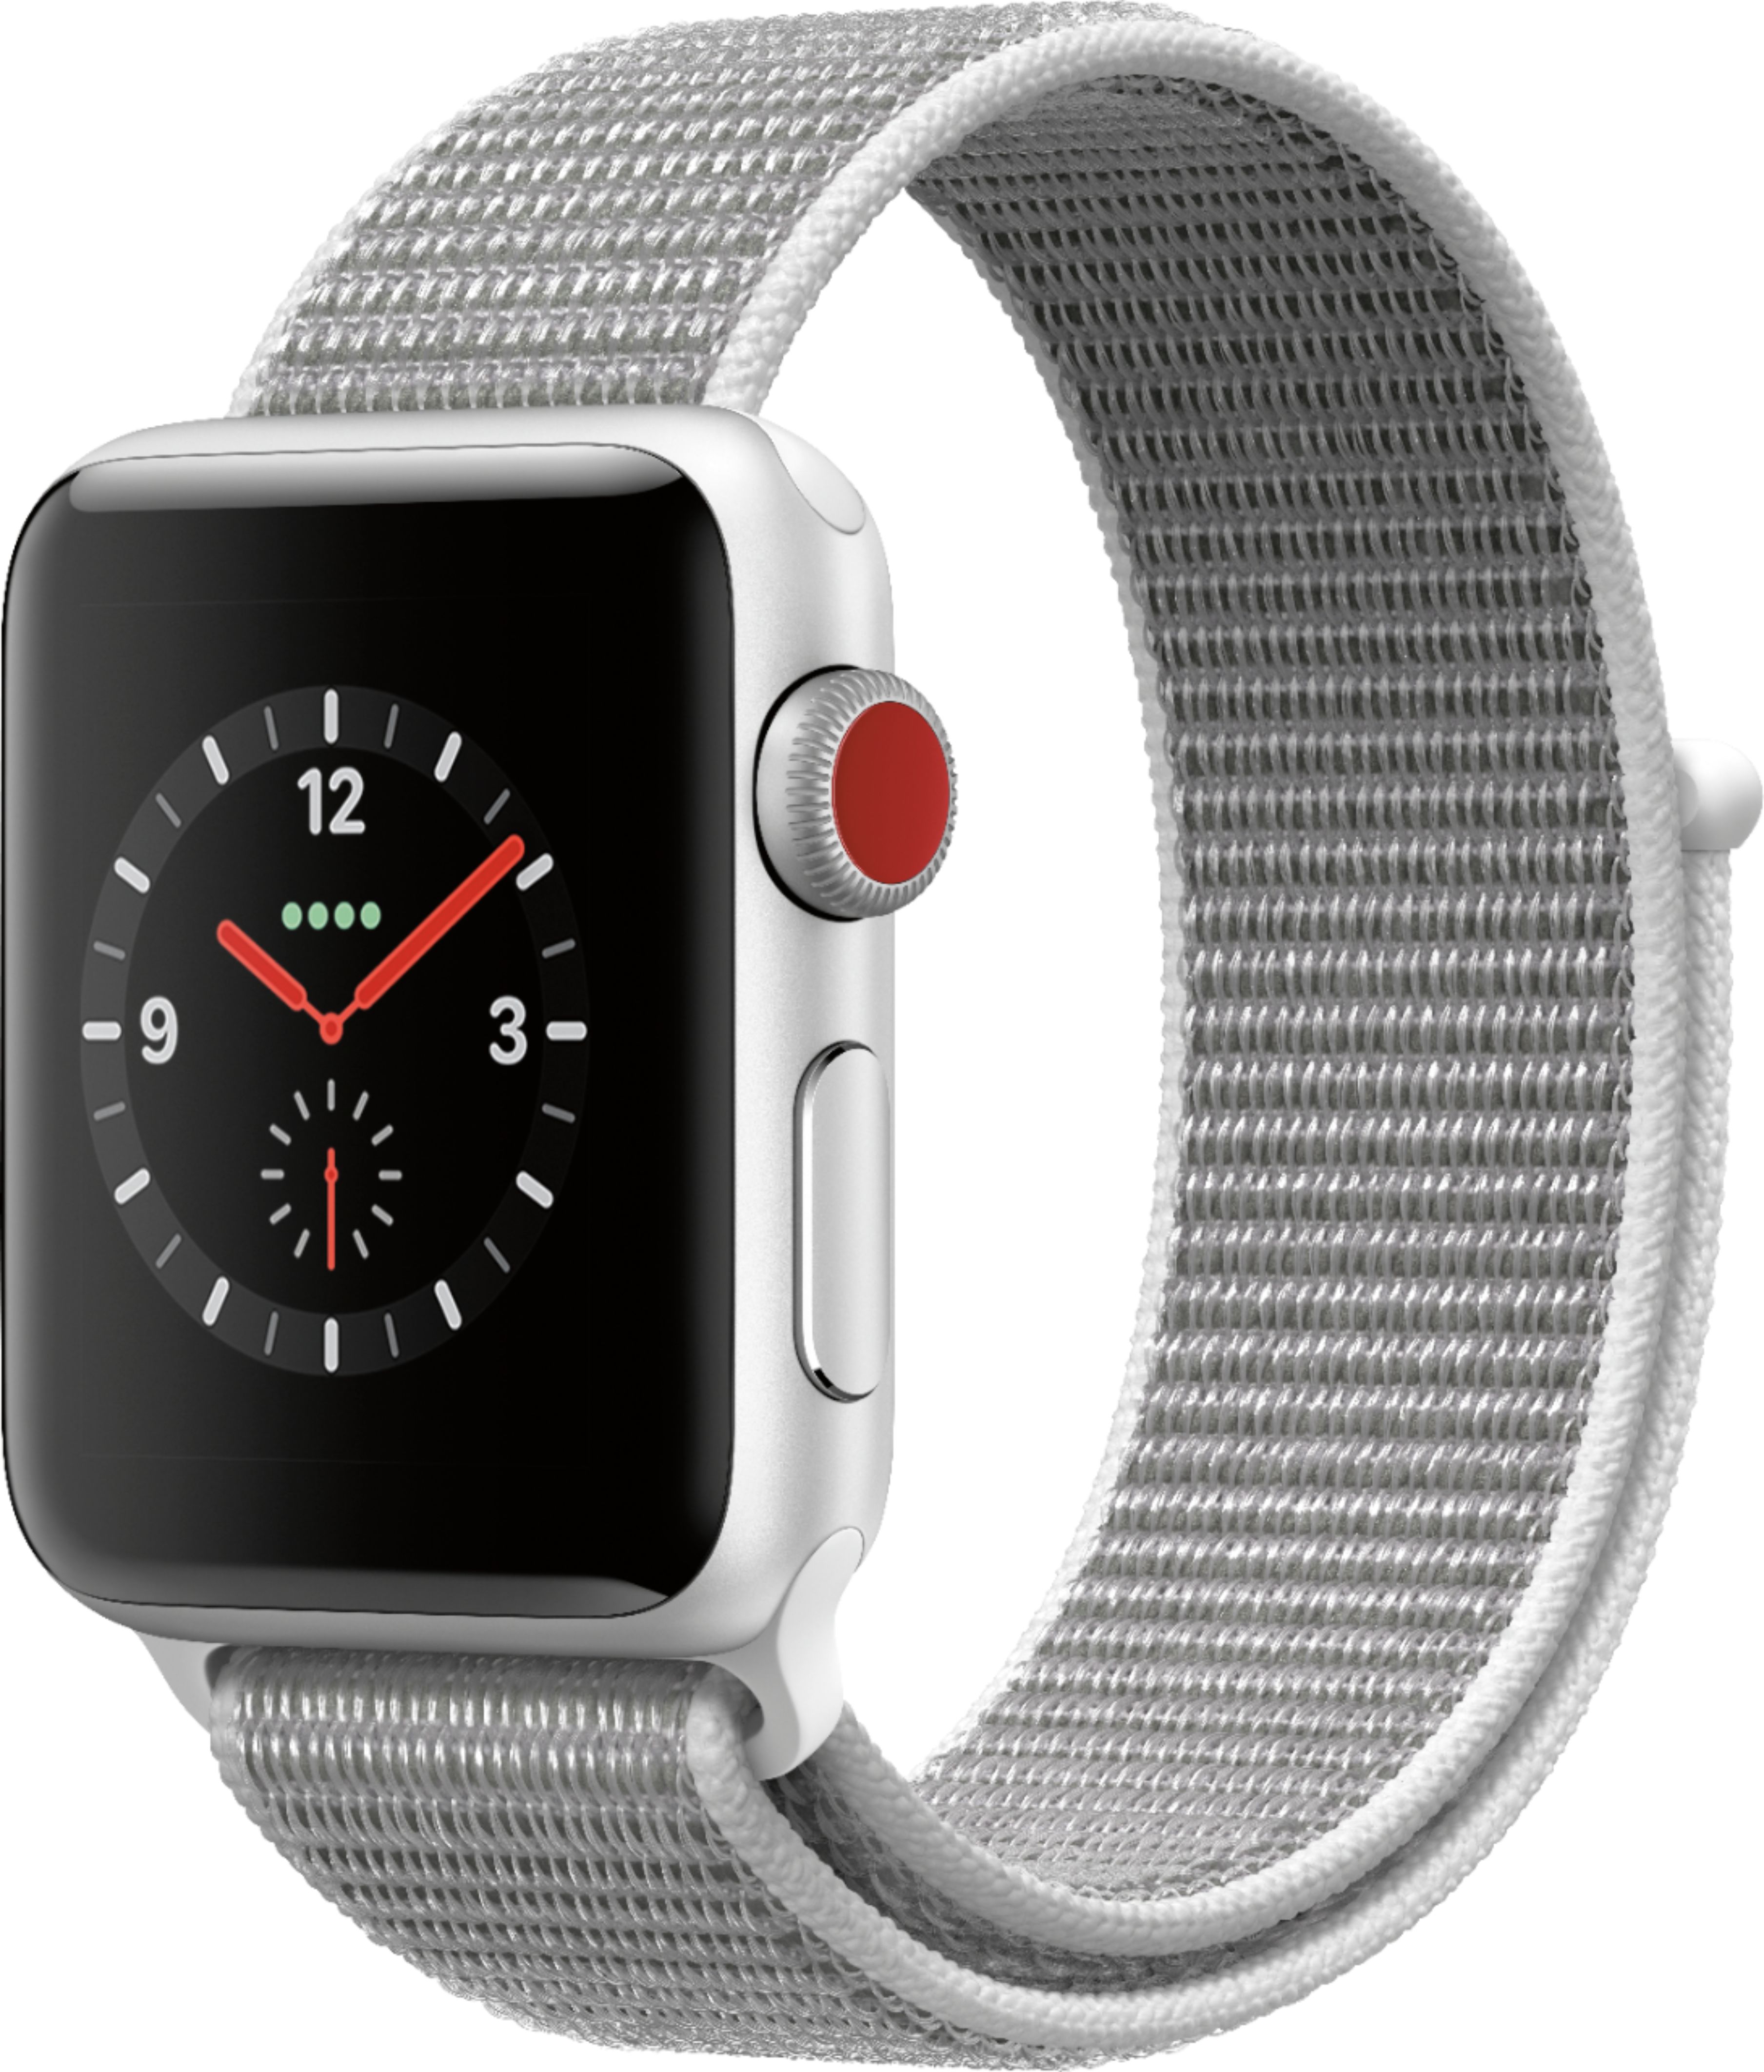 Apple Watch Series 3 (GPS + Cellular) 38mm Silver - Best Buy